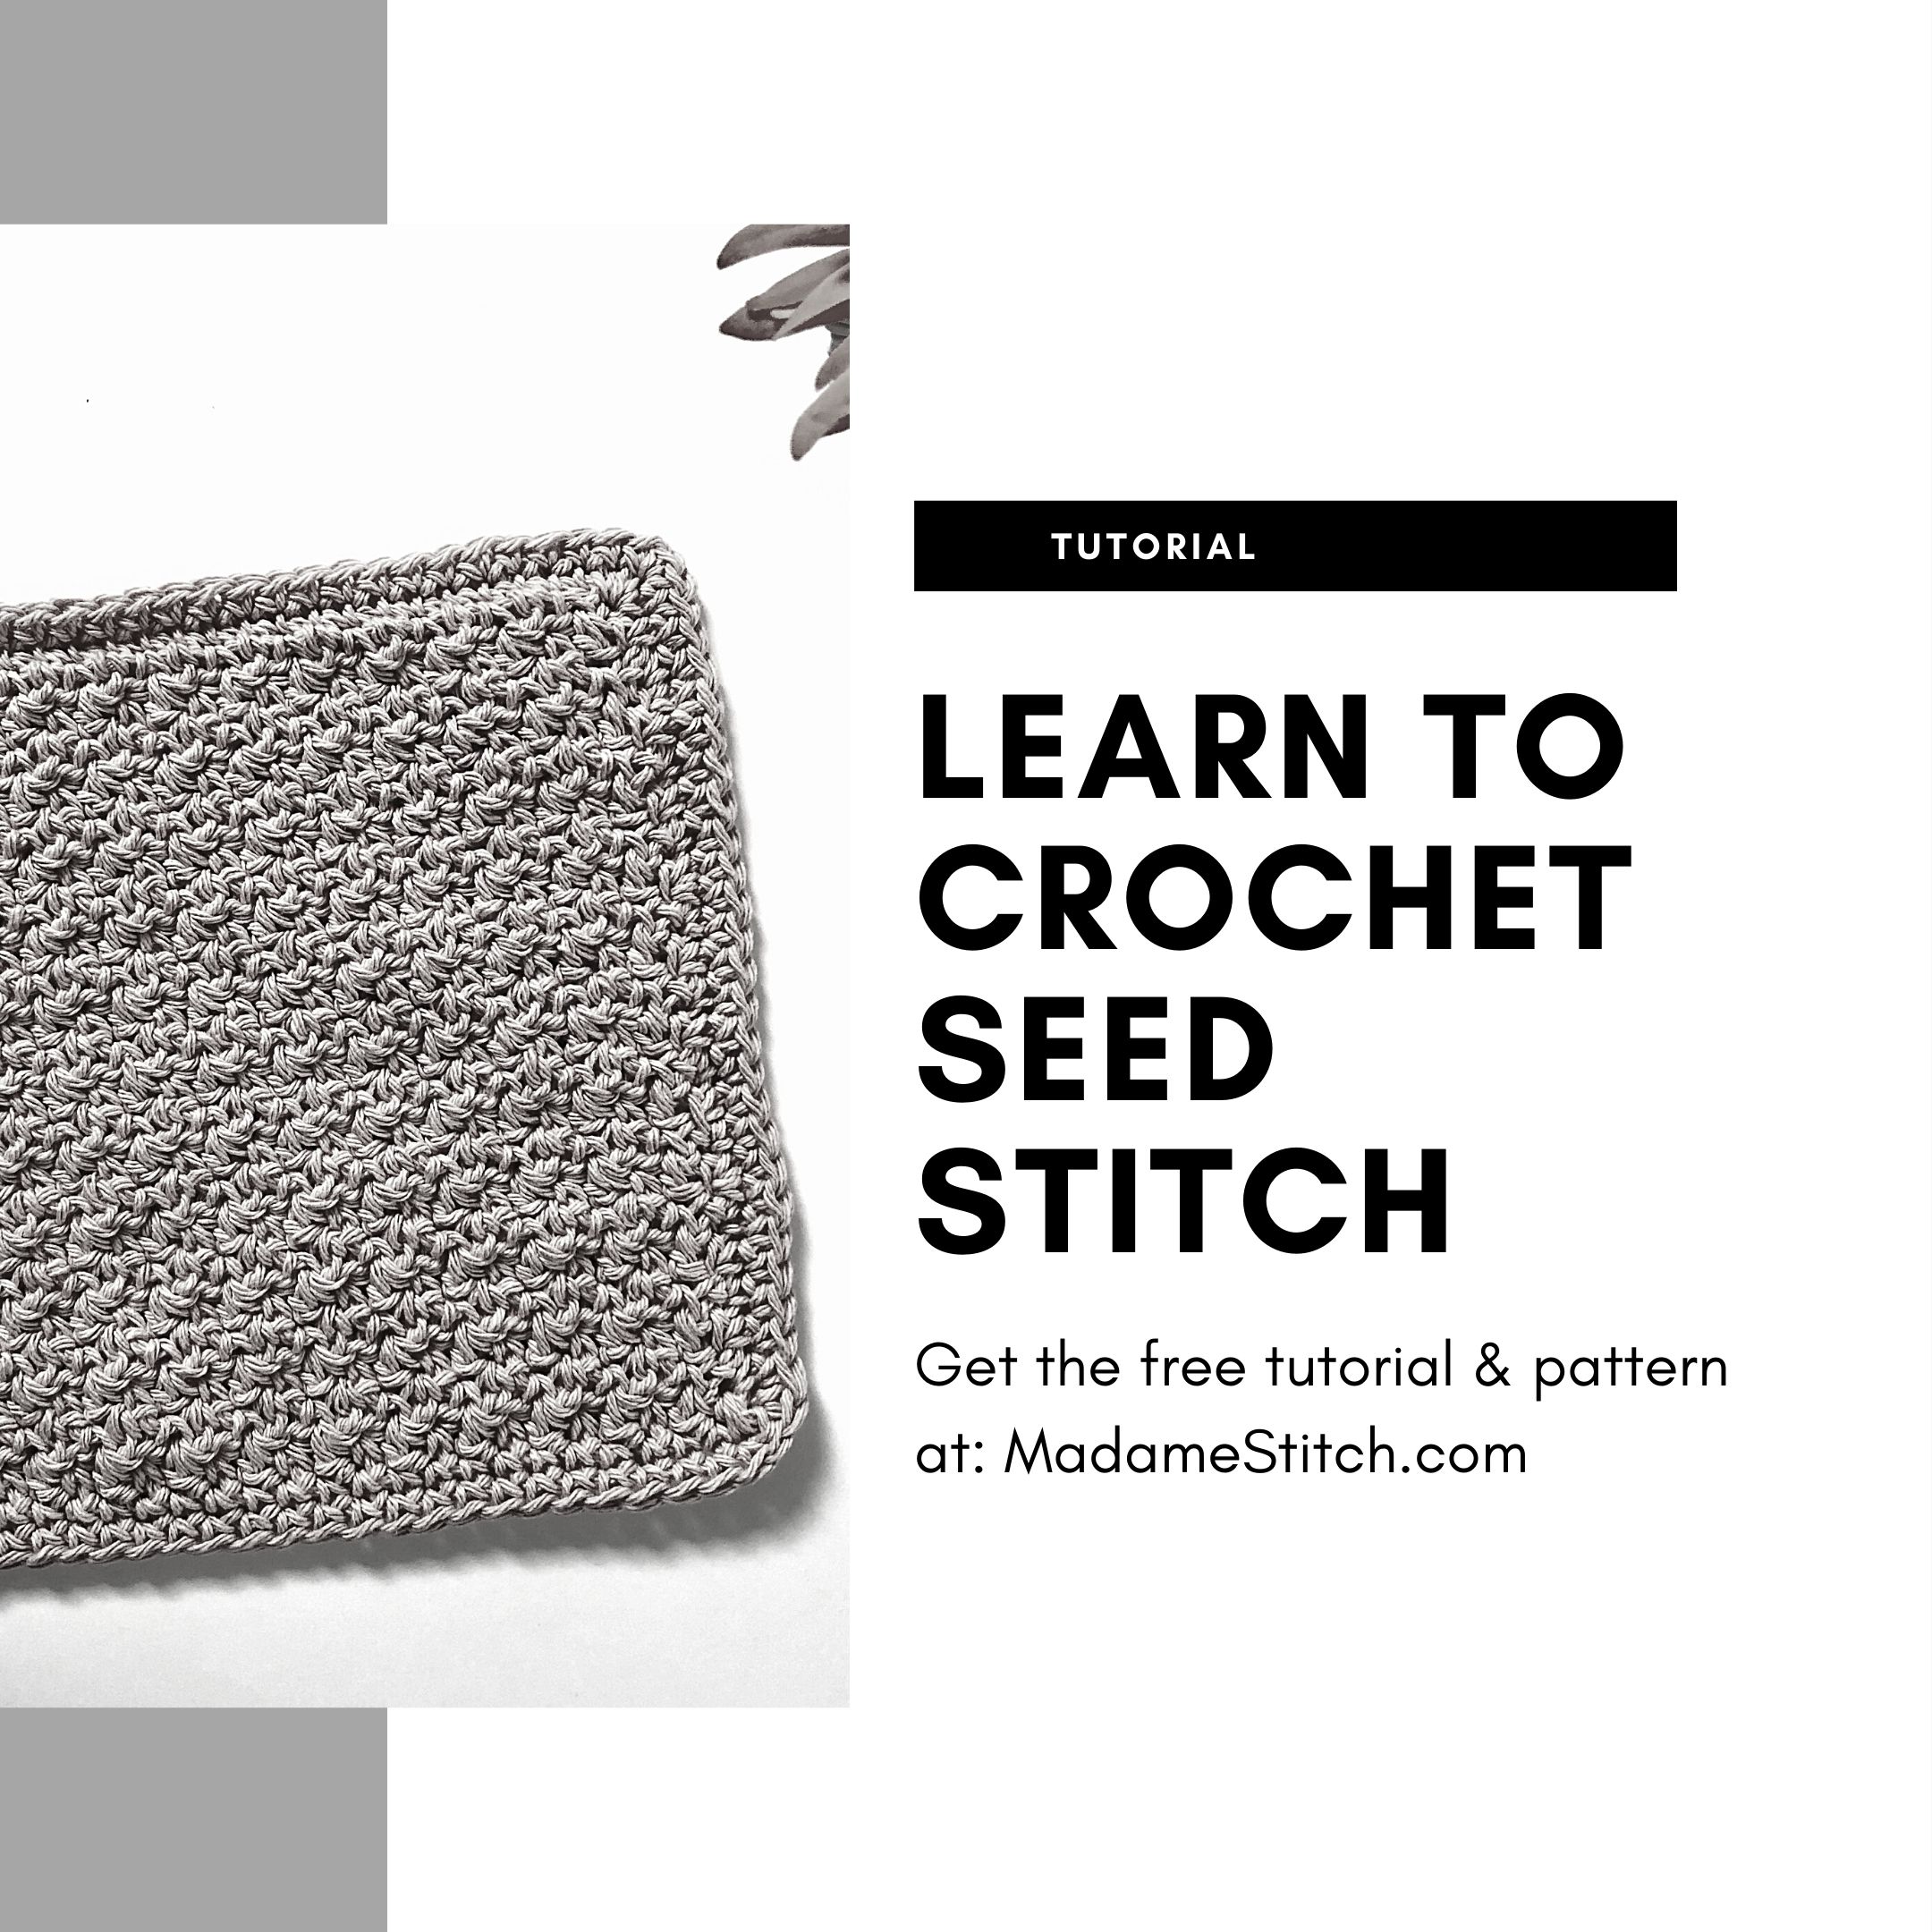 Crochet seed stitch tutorial